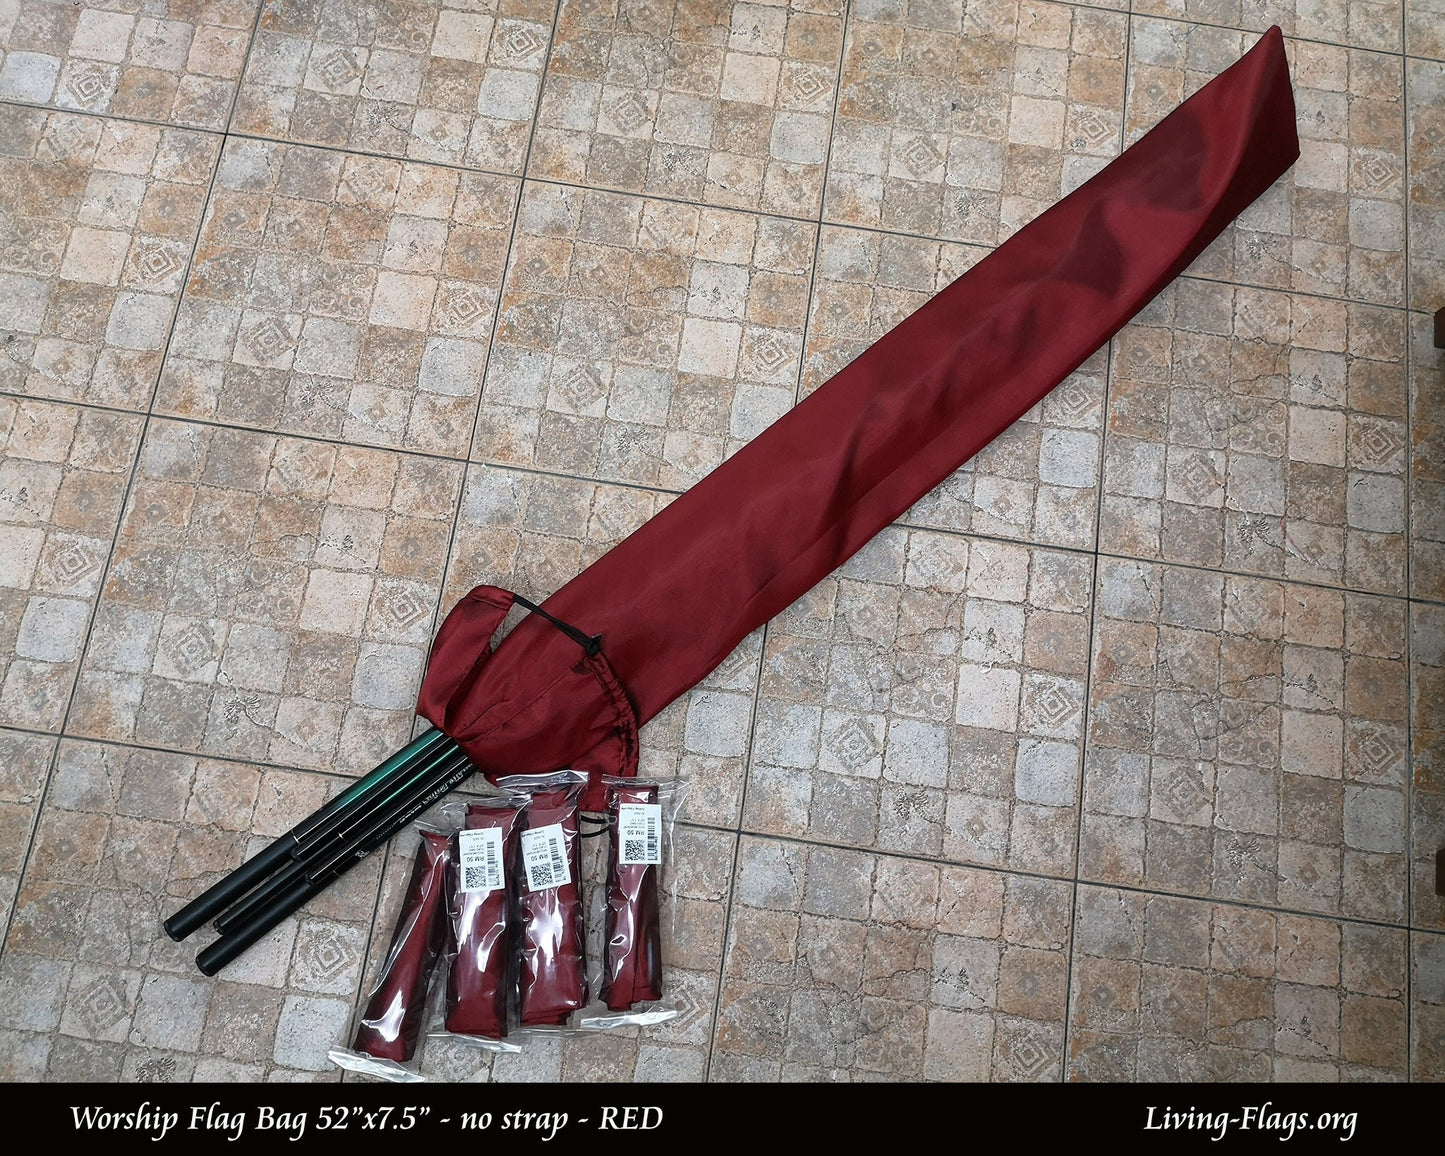 Worship Flag Bag 52"x 7.5" - Red Design - L-Size